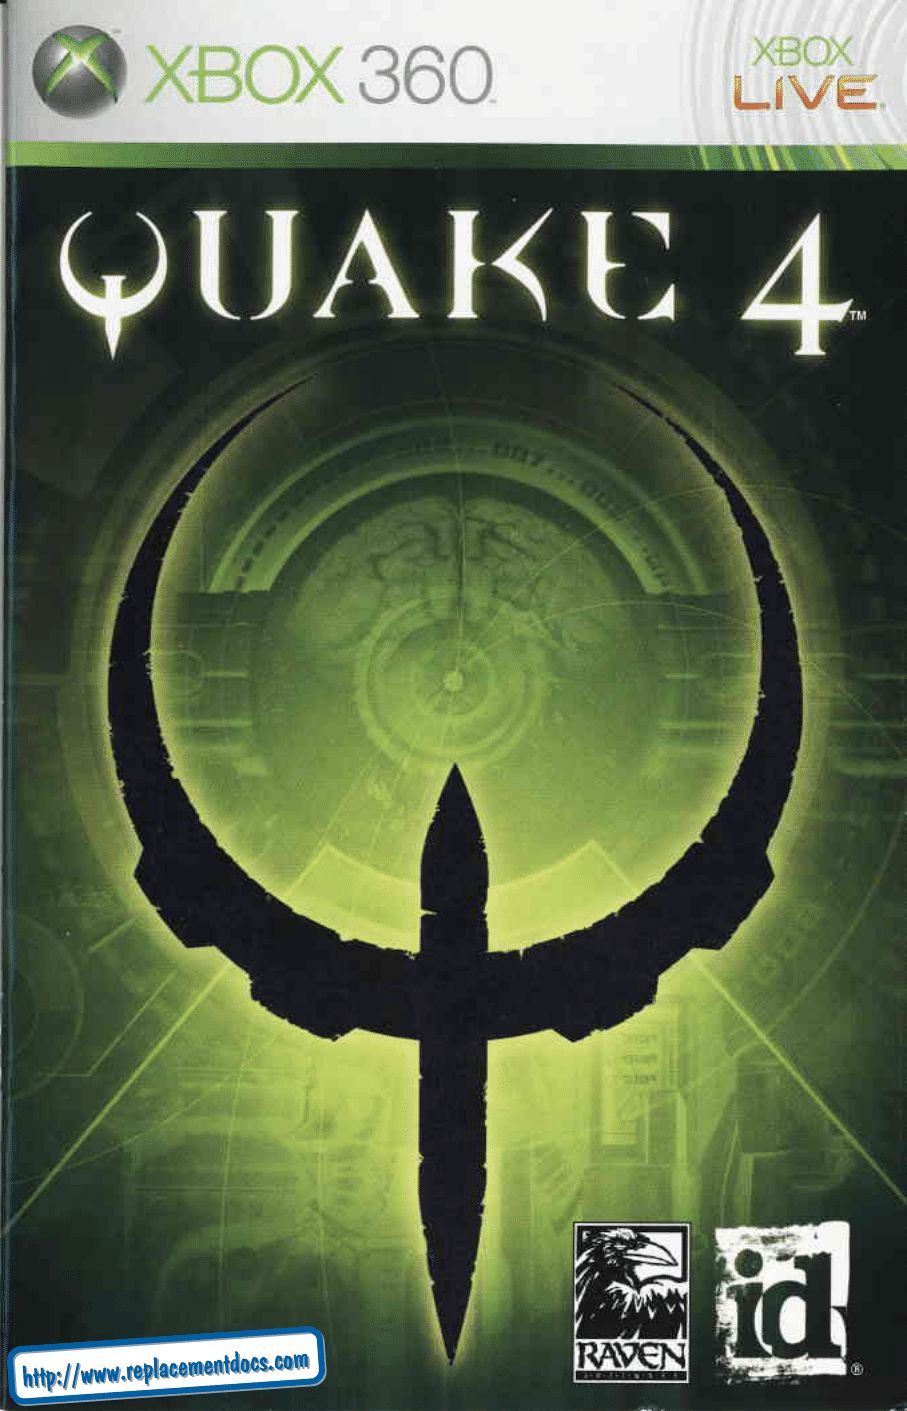 Quake 4 (Xbox 360) Game Manual 1